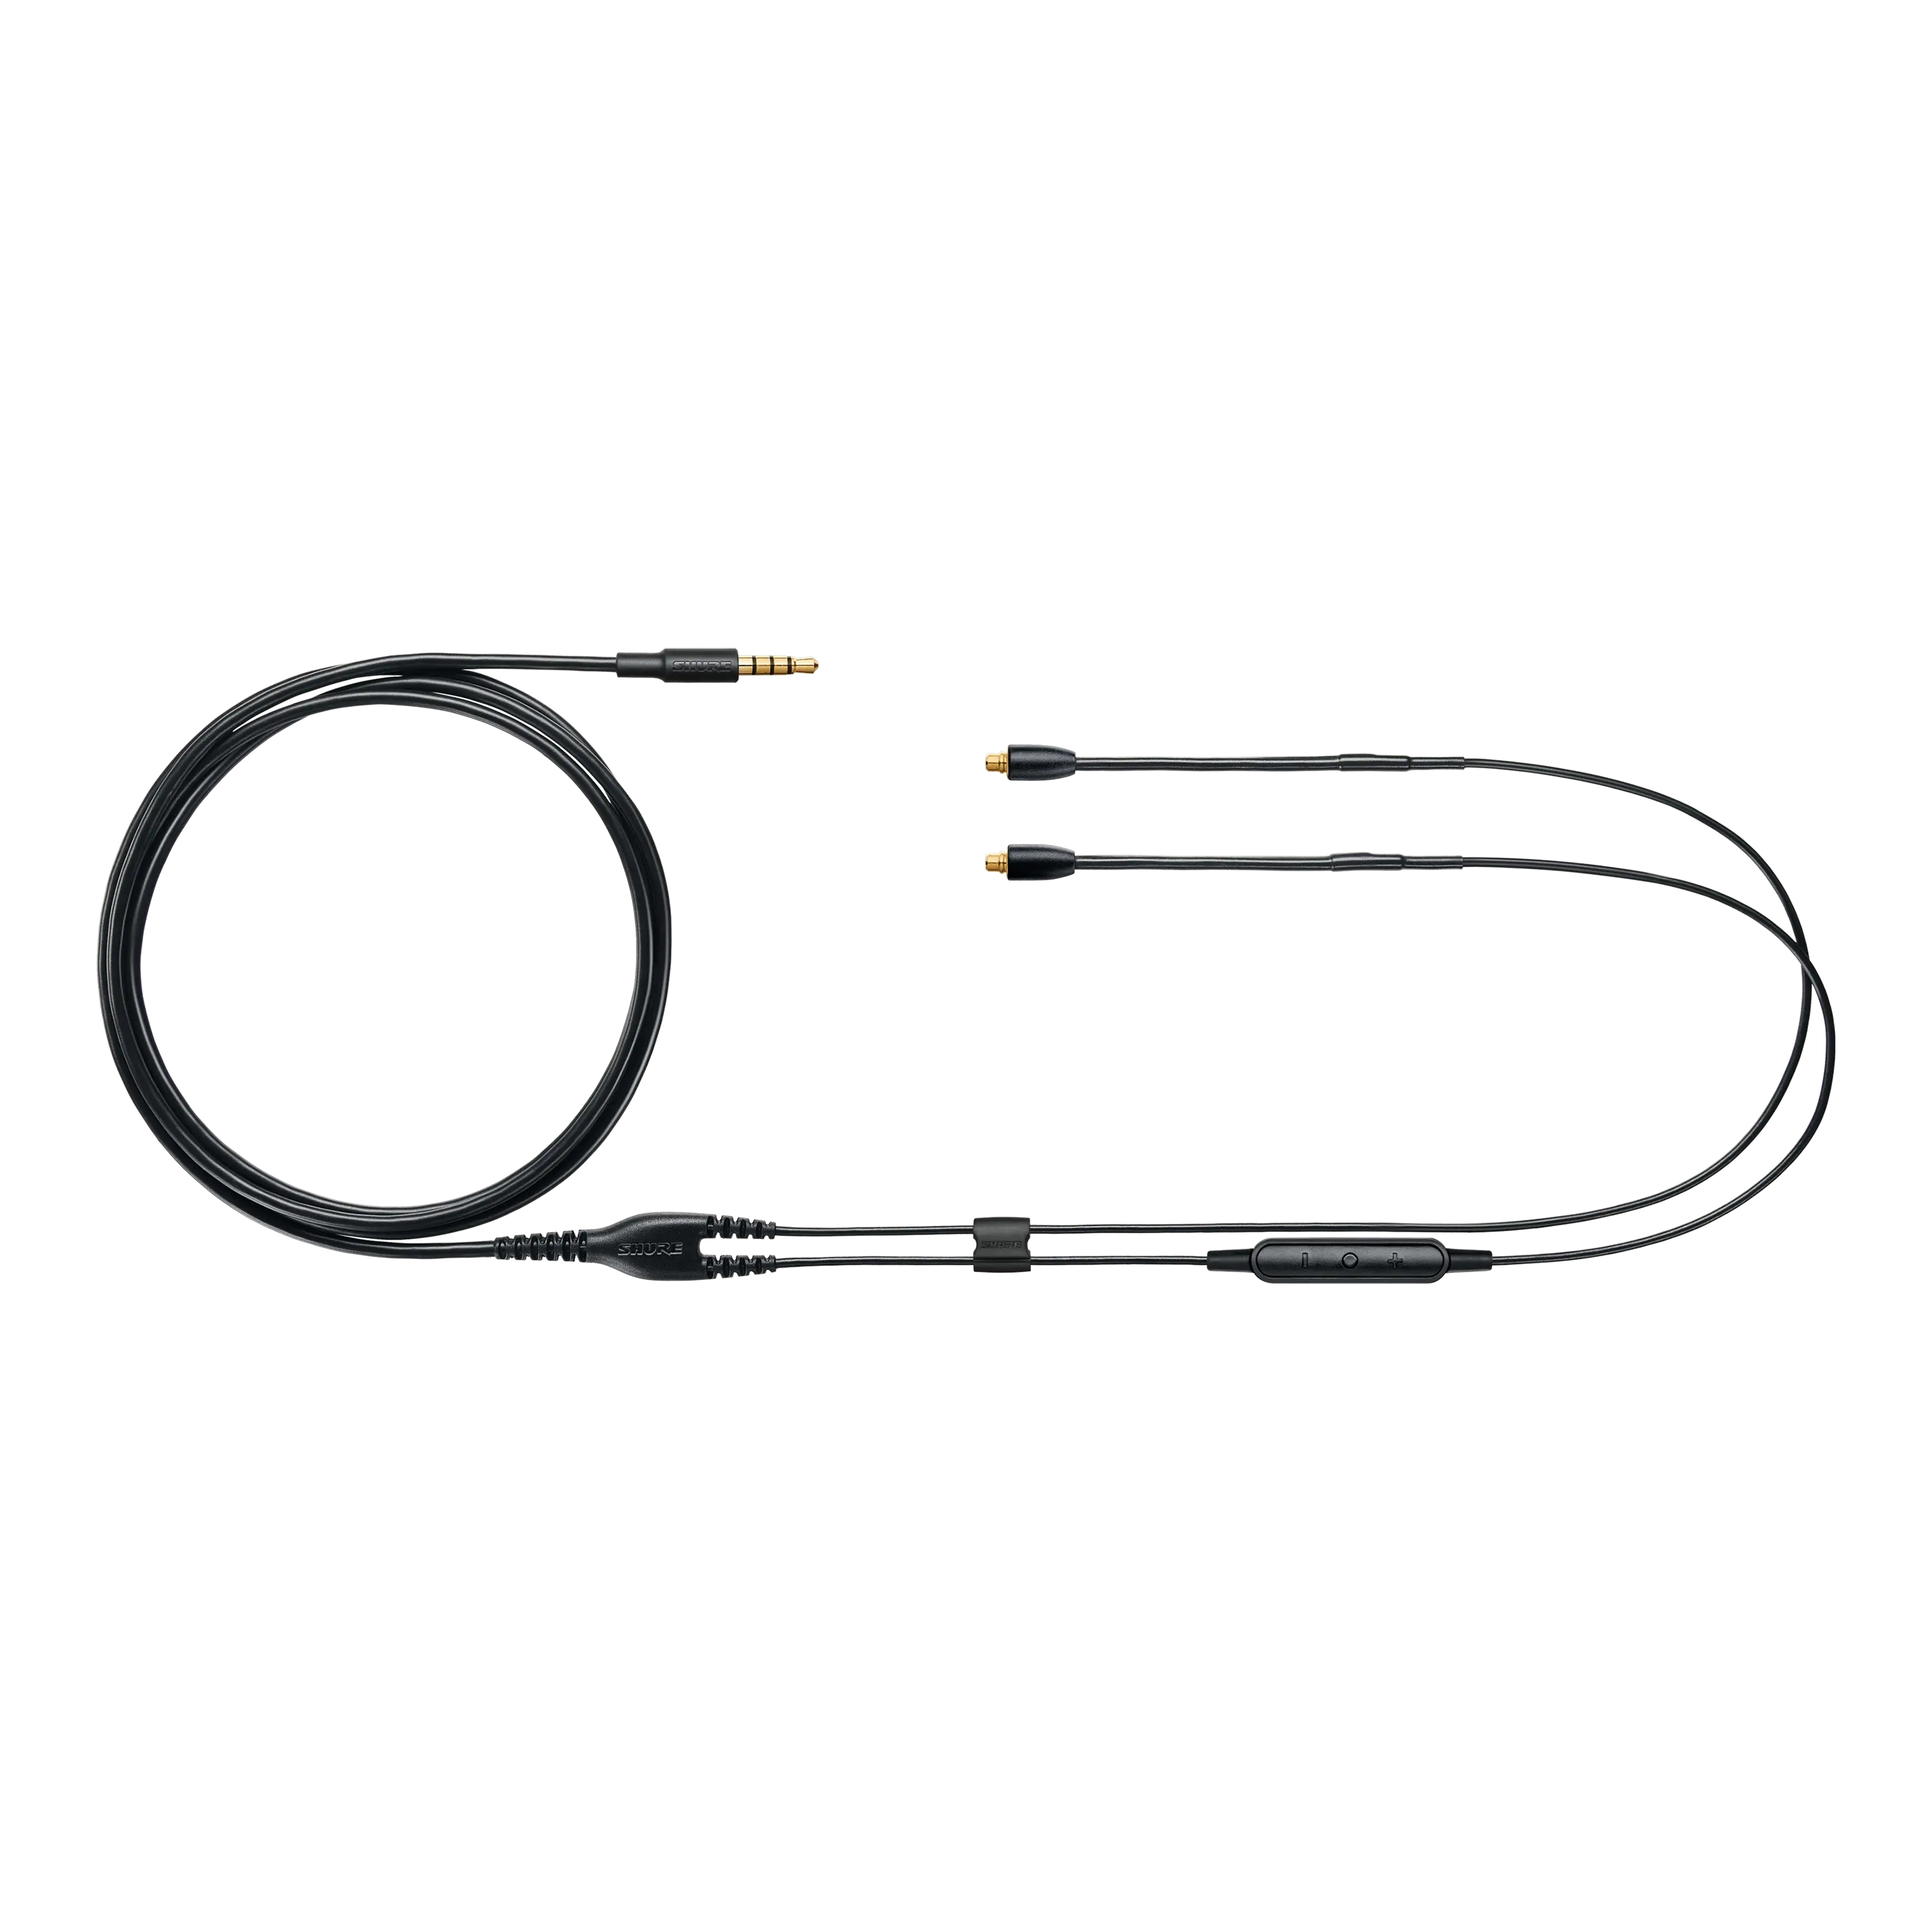 RMCE - Remote + mic earphone accessory cable - Shure United Kingdom